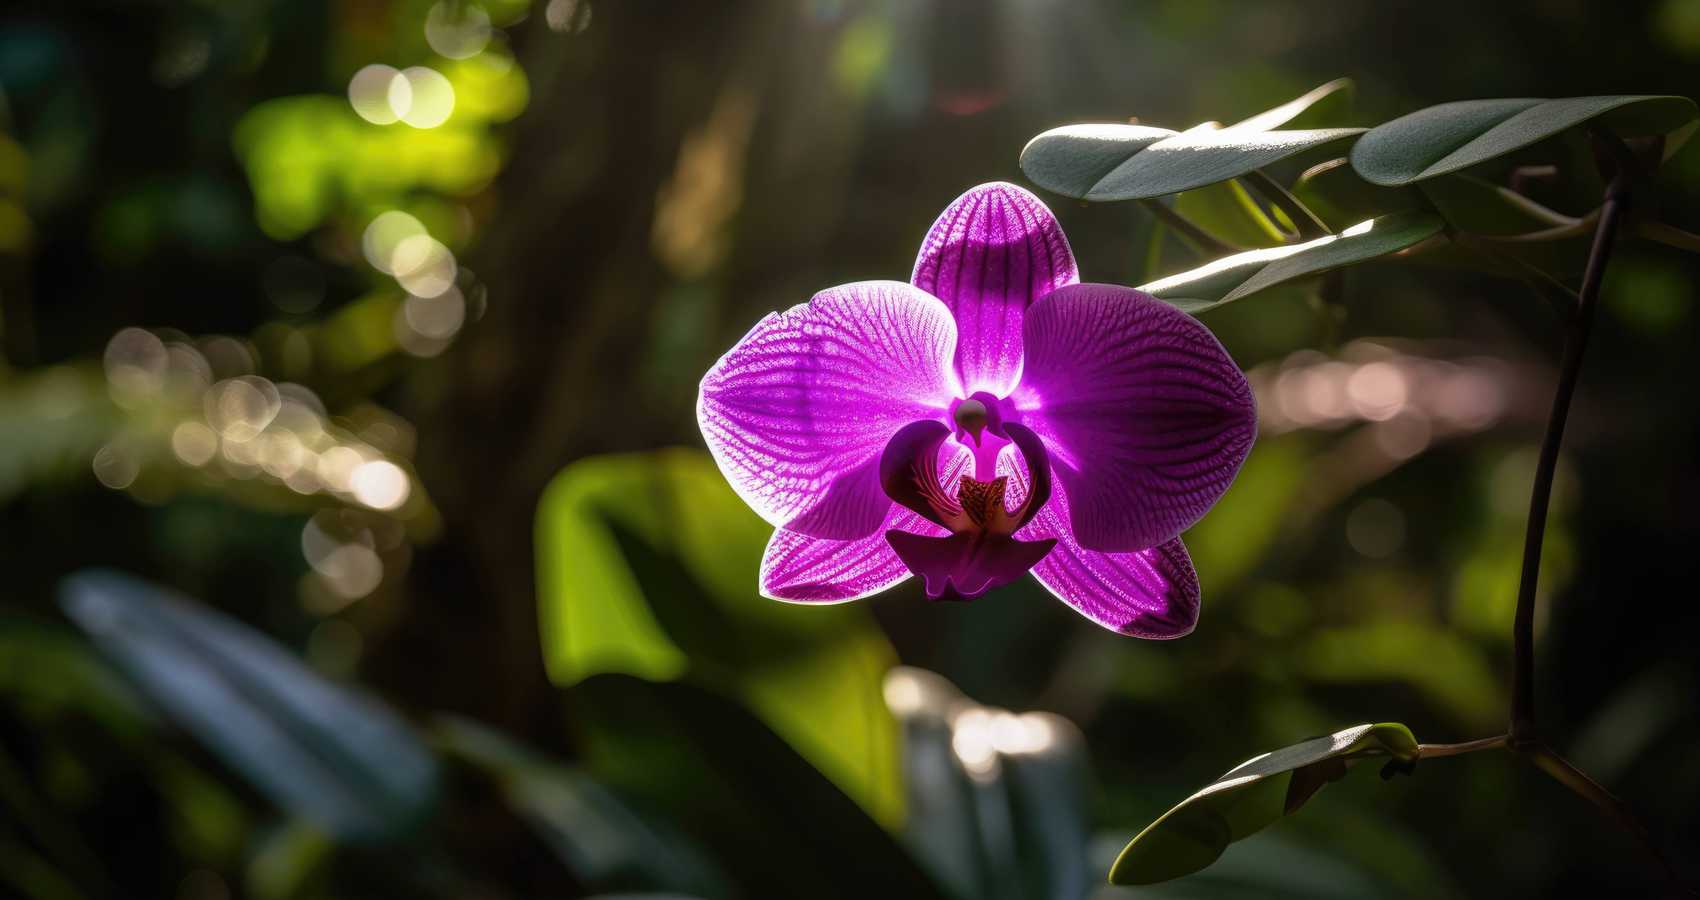 Hardy Orchids Haiku by Eric Robert Nolan at Spillwords.com